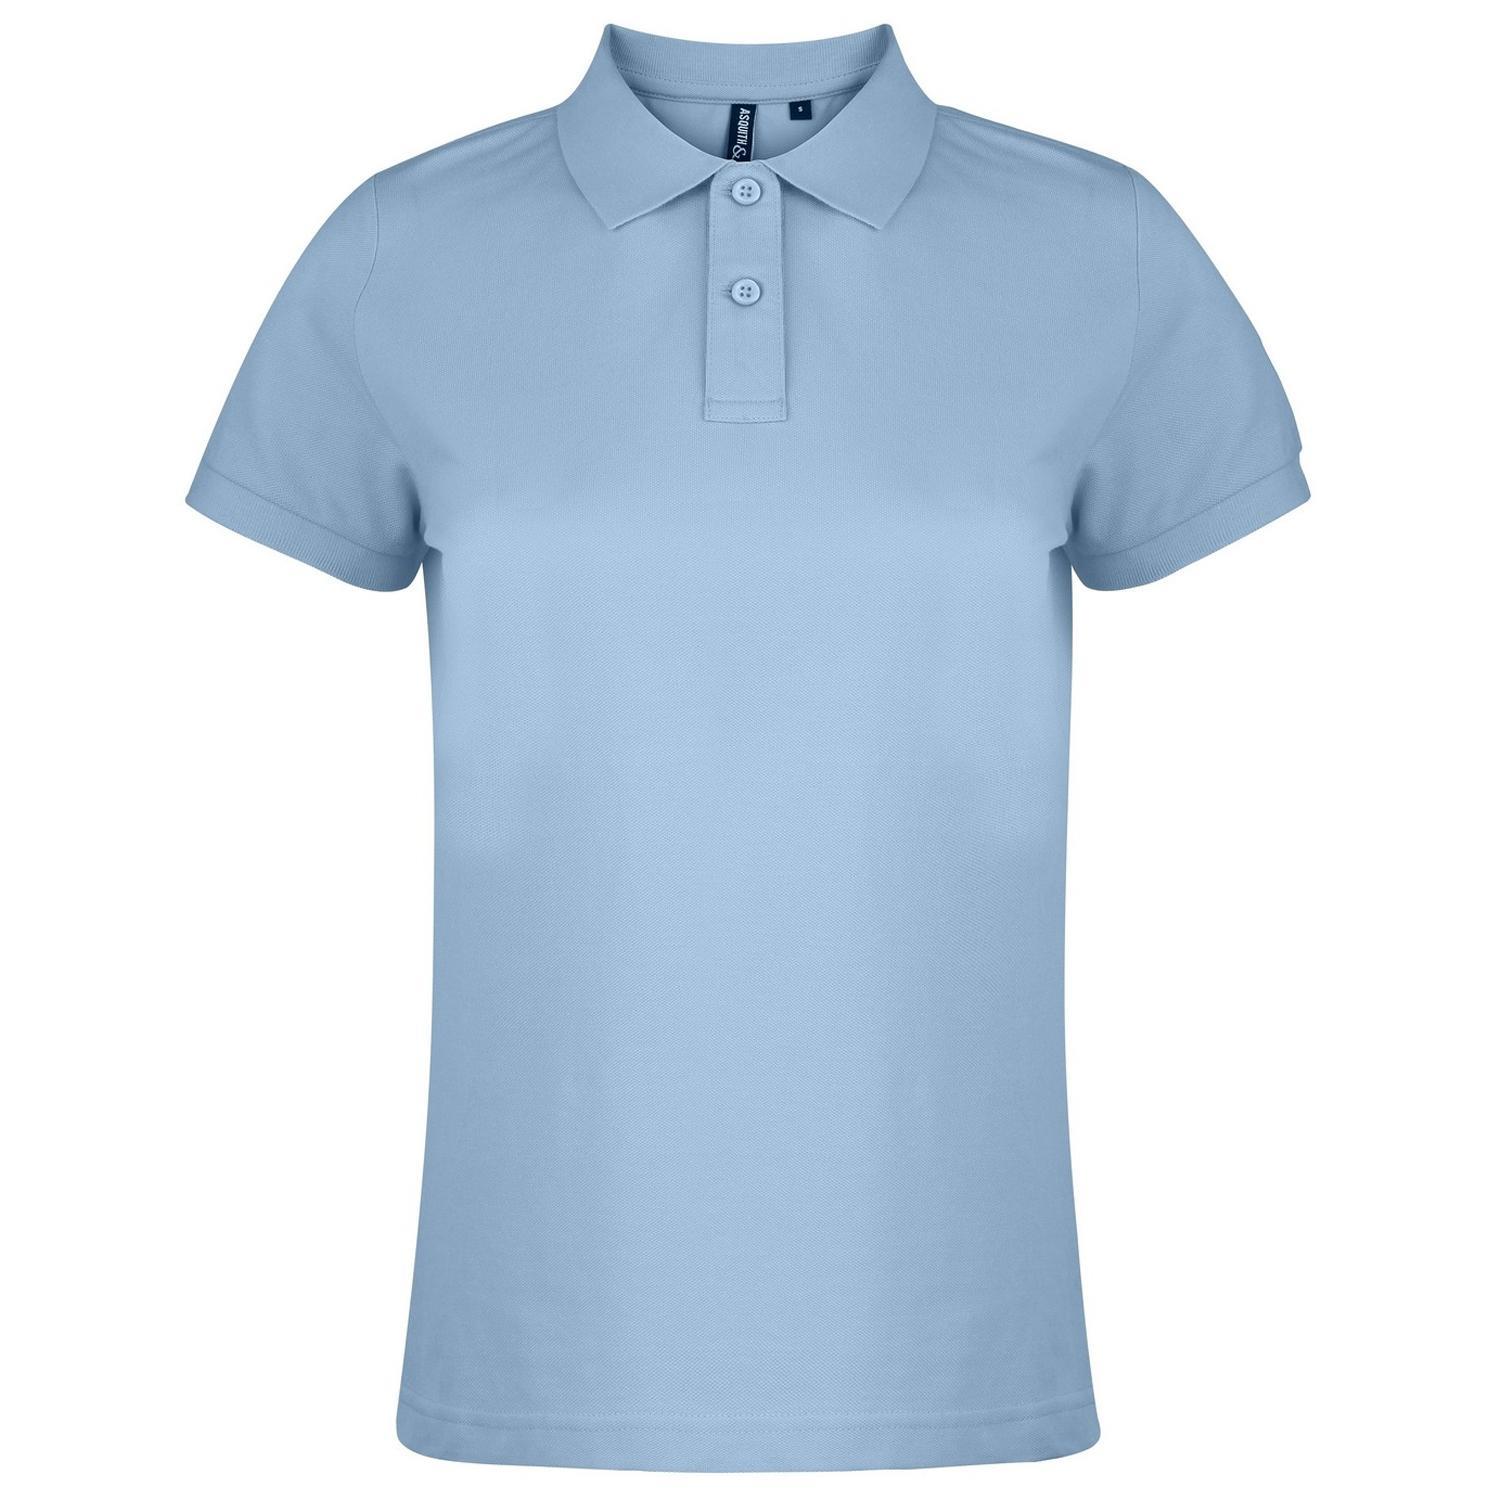 Asquith & Fox Womens/Ladies Plain Short Sleeve Polo Shirt (Sky) (L)